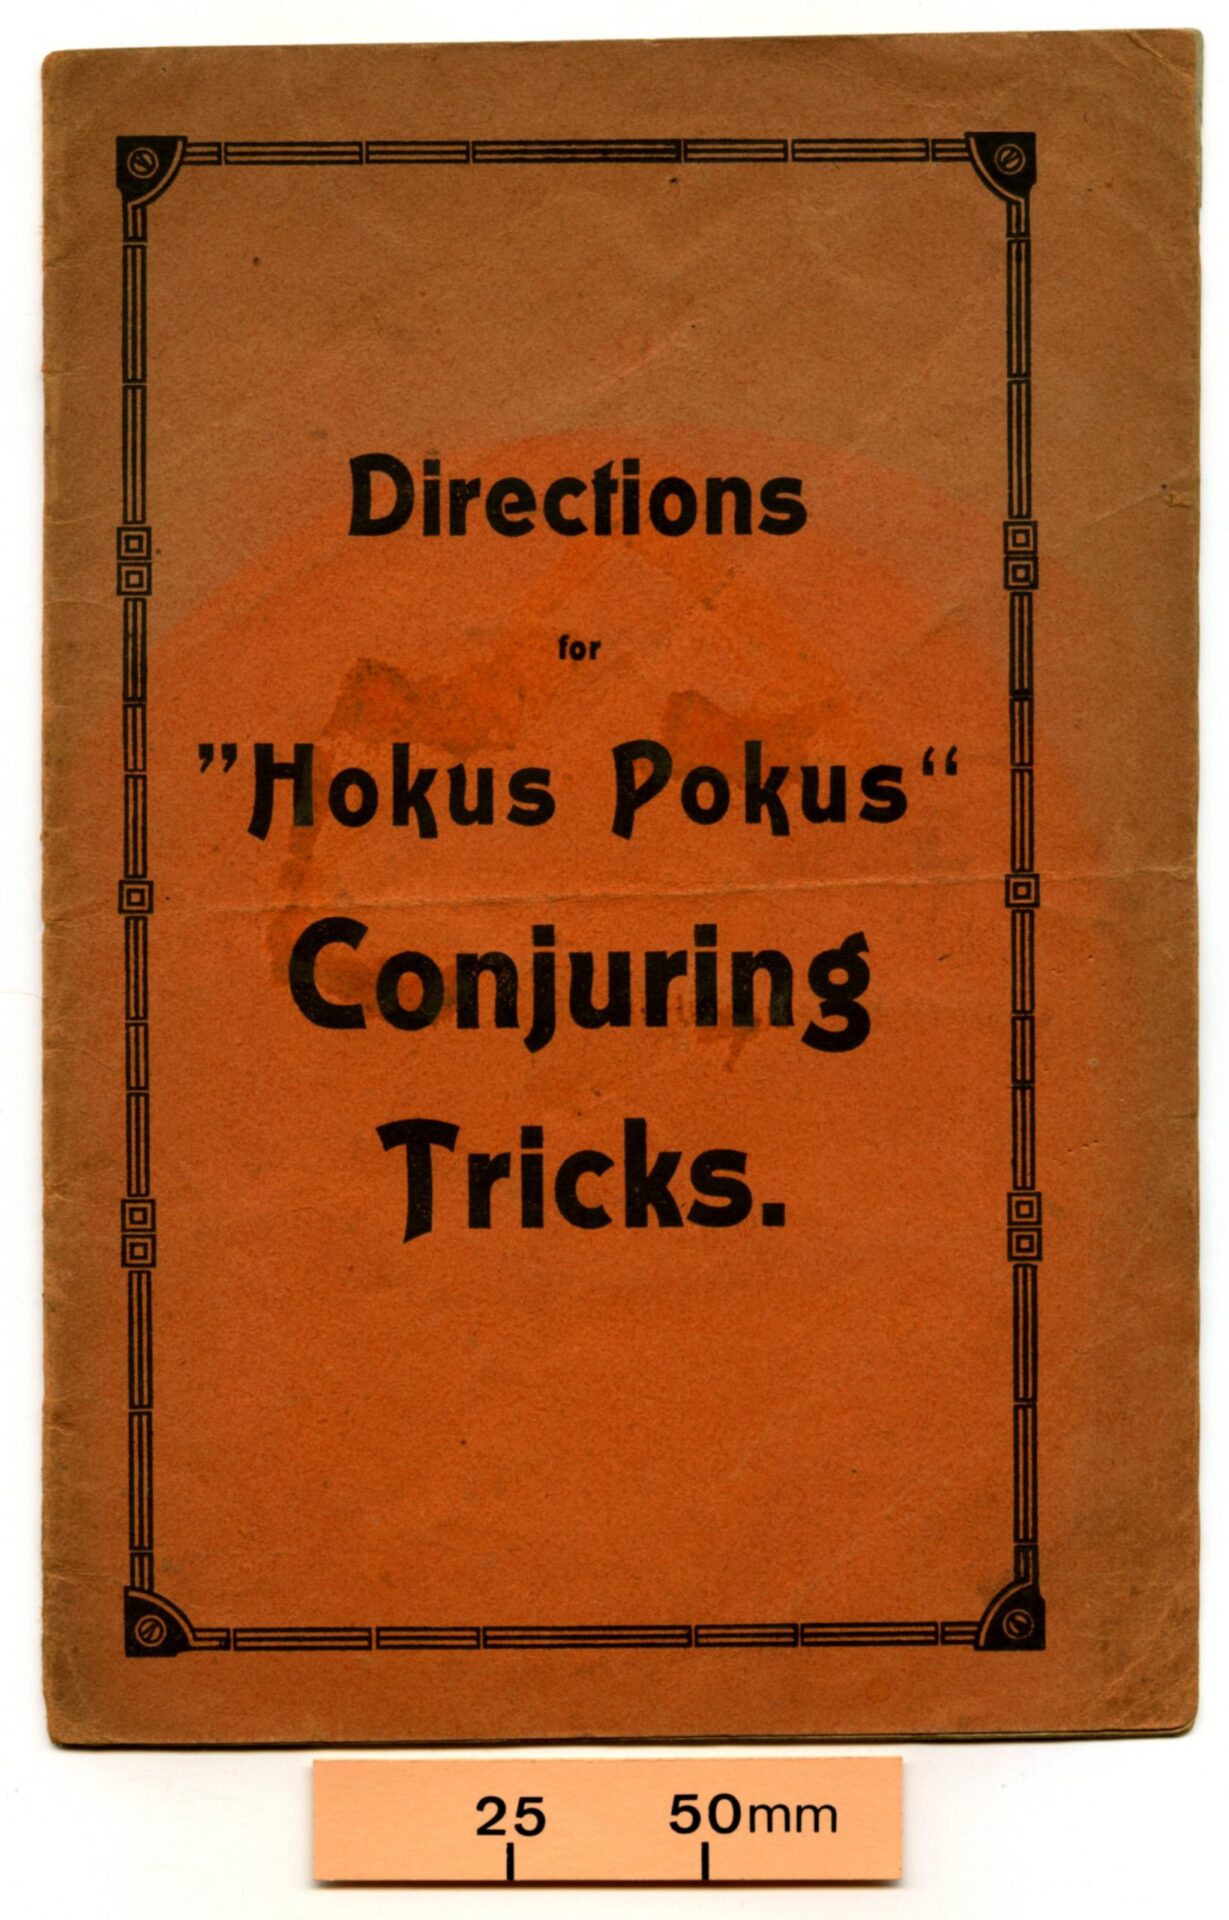 Directions for “Hokus Pokus” Conjuring Tricks. J.W. Spear & Sons, Nuremburg